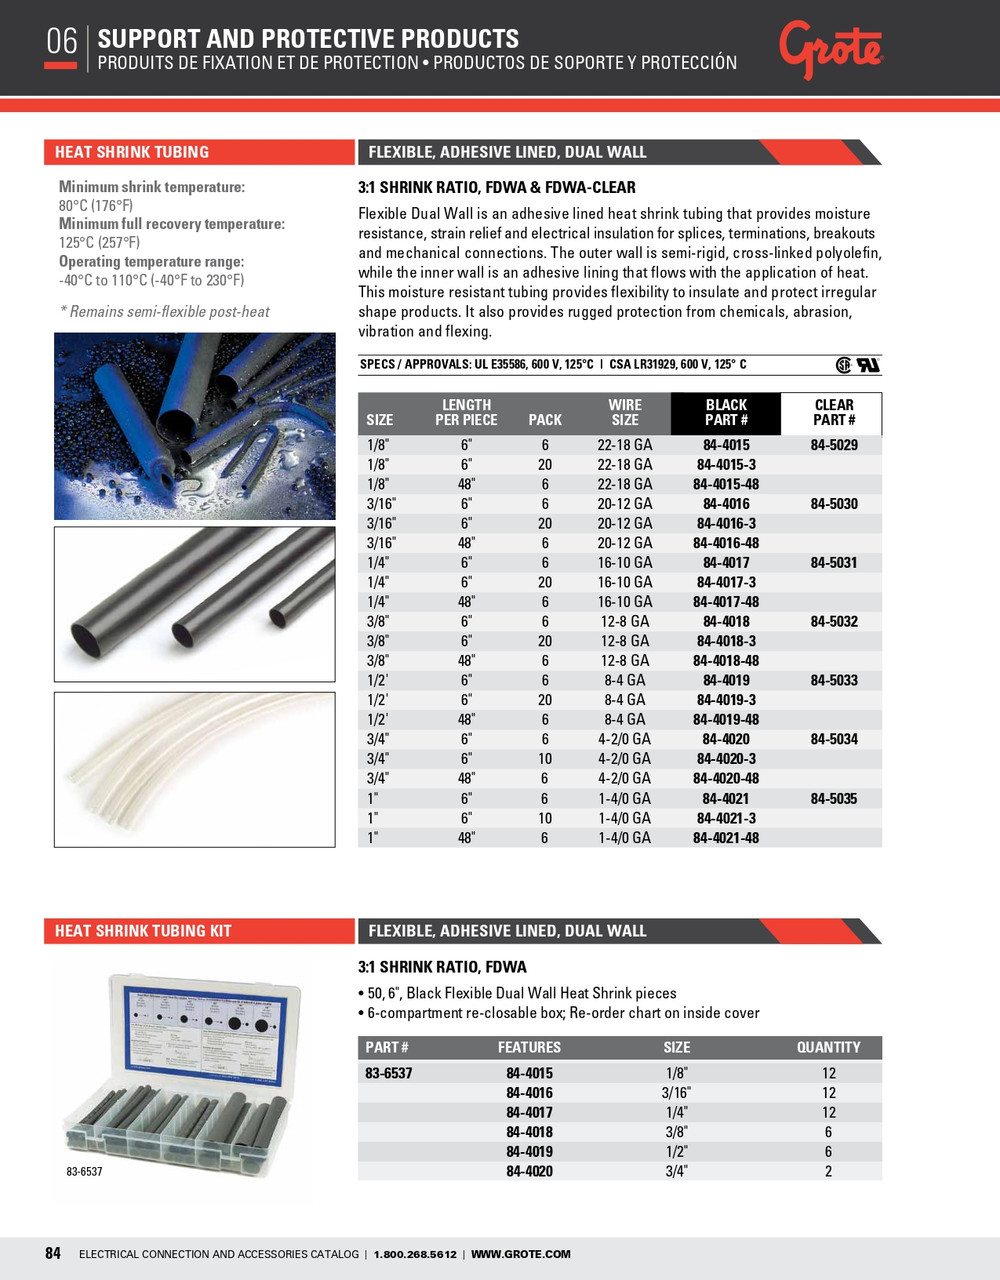 1/4" Dual Wall 3:1 Flexible Adhesive Lined Heat Shrink Tubing 6" @ 6 Pack - Black  84-4017